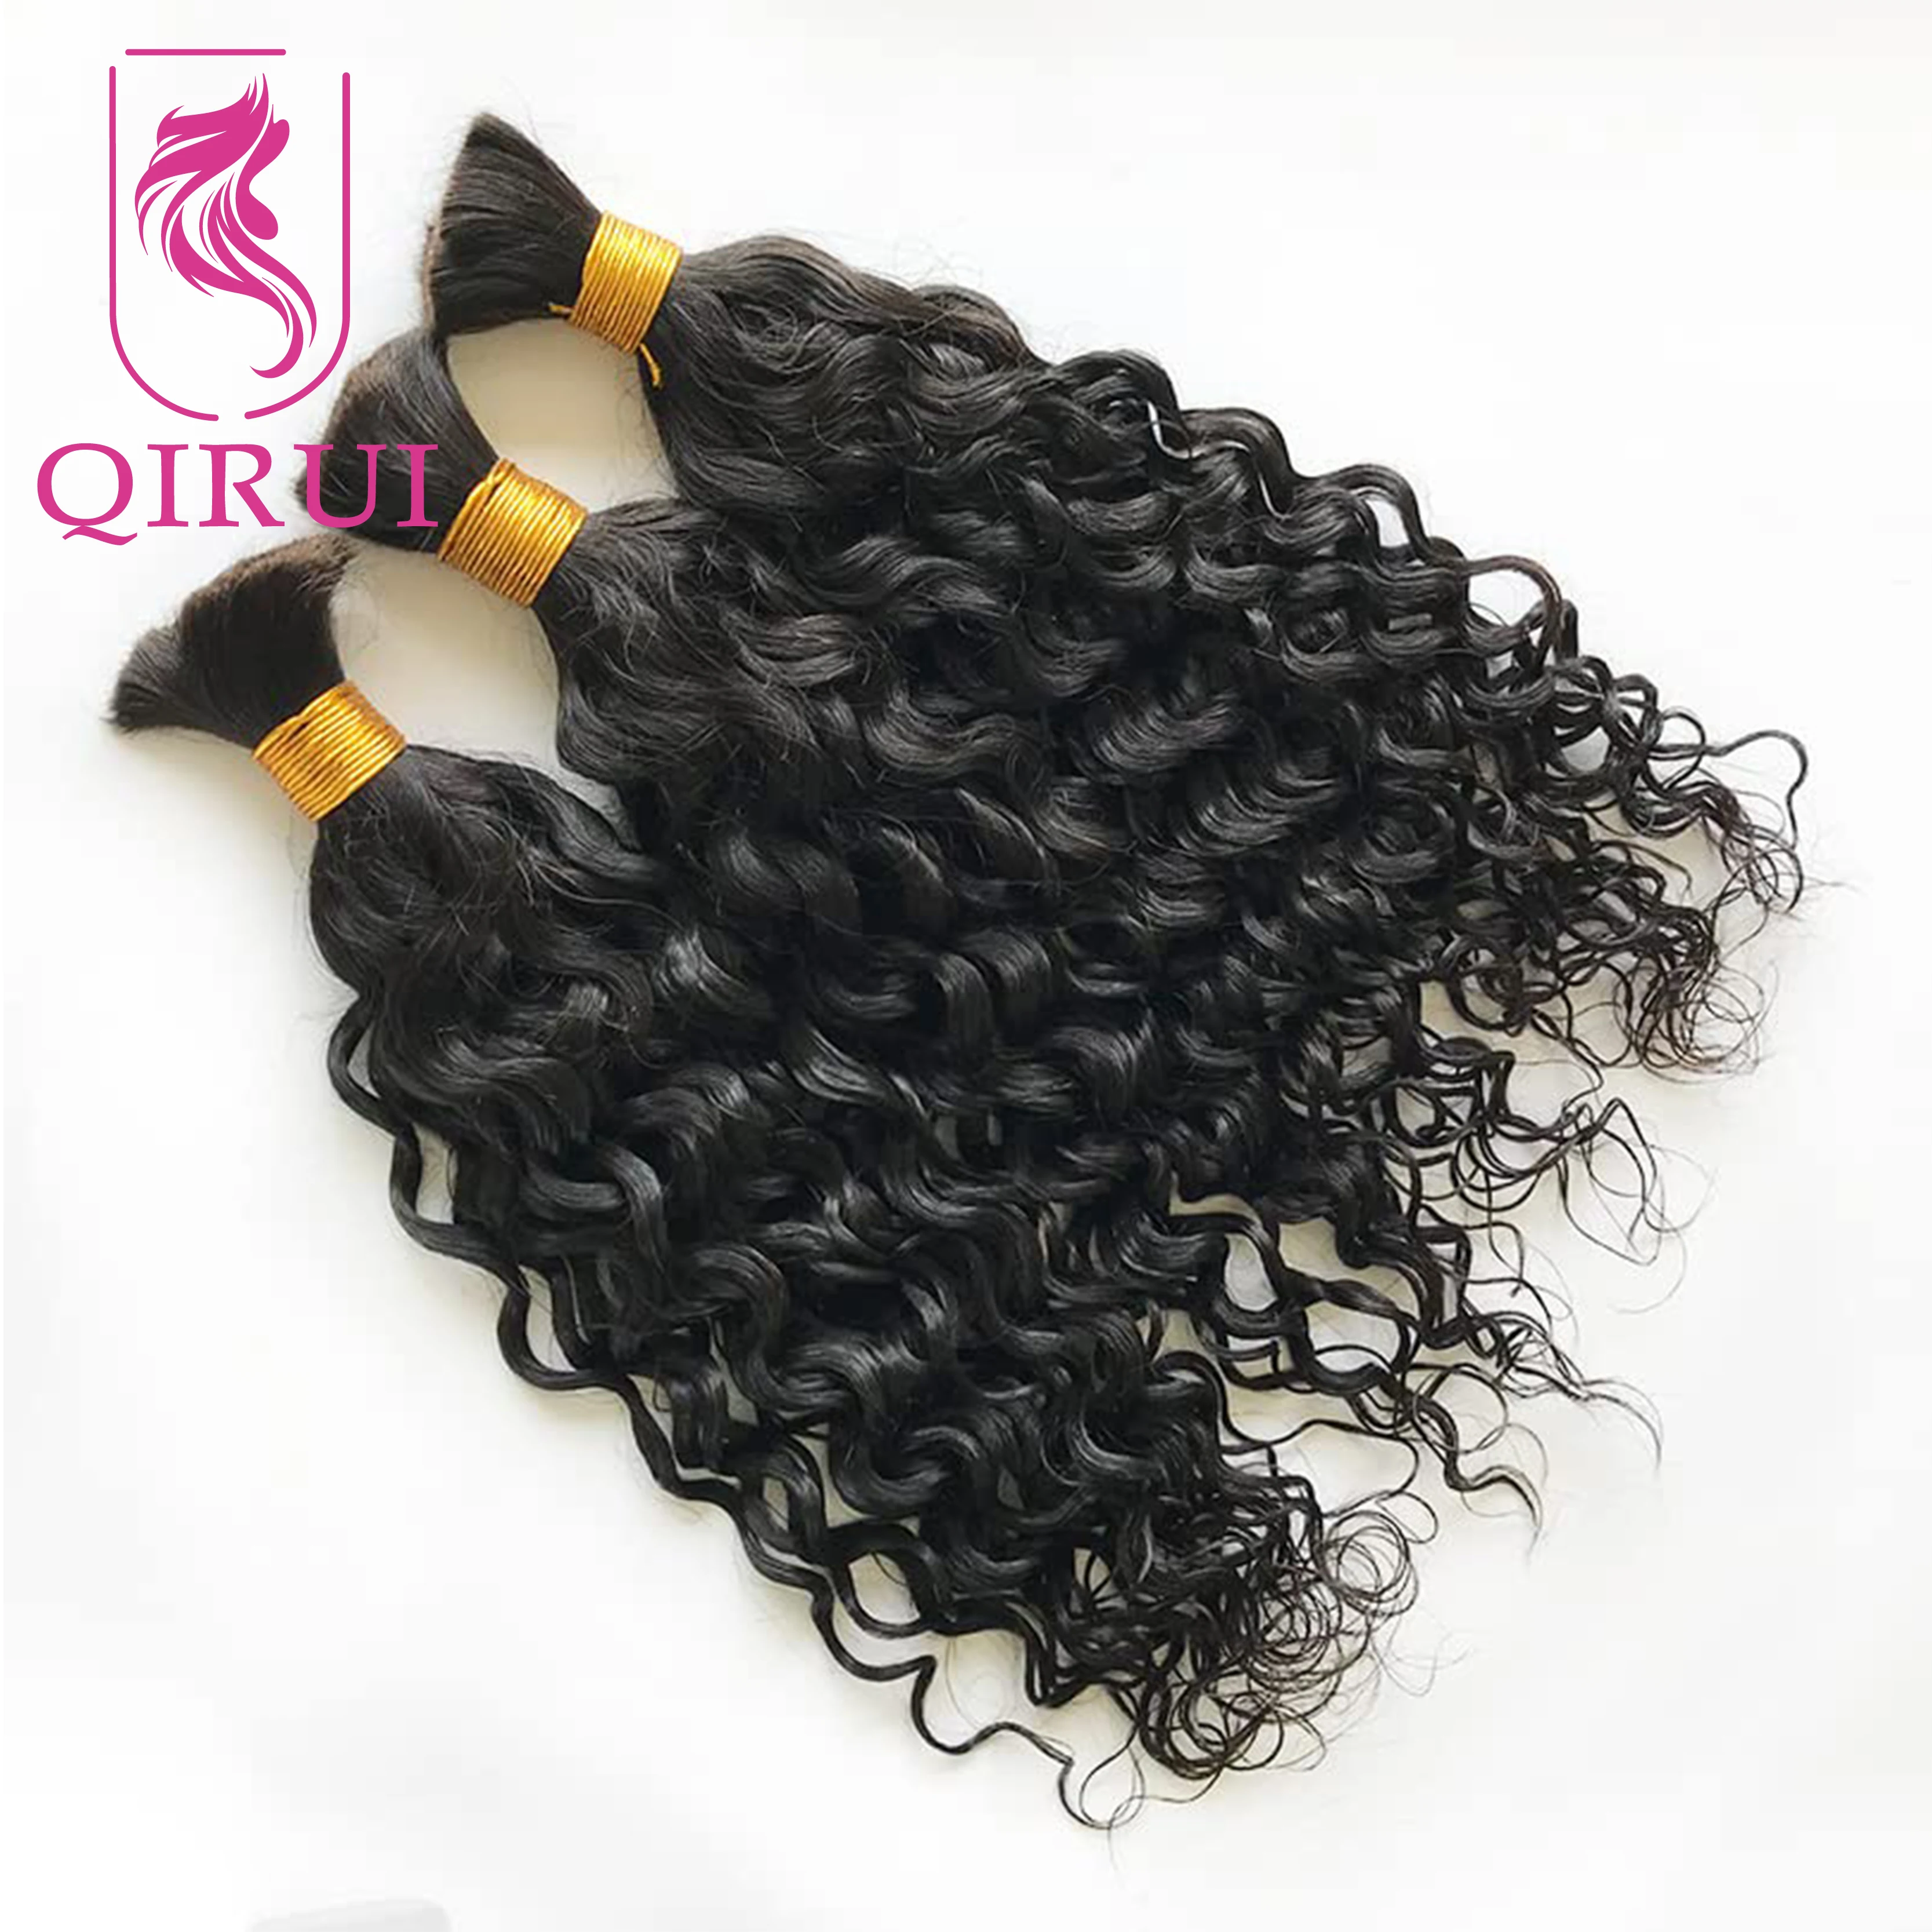 

Bulk Human Hair For Braiding Indian Curly Double Drawn Burmese Remy Knotless Hair Extensions Crochet Boho Braids Hair No Weft